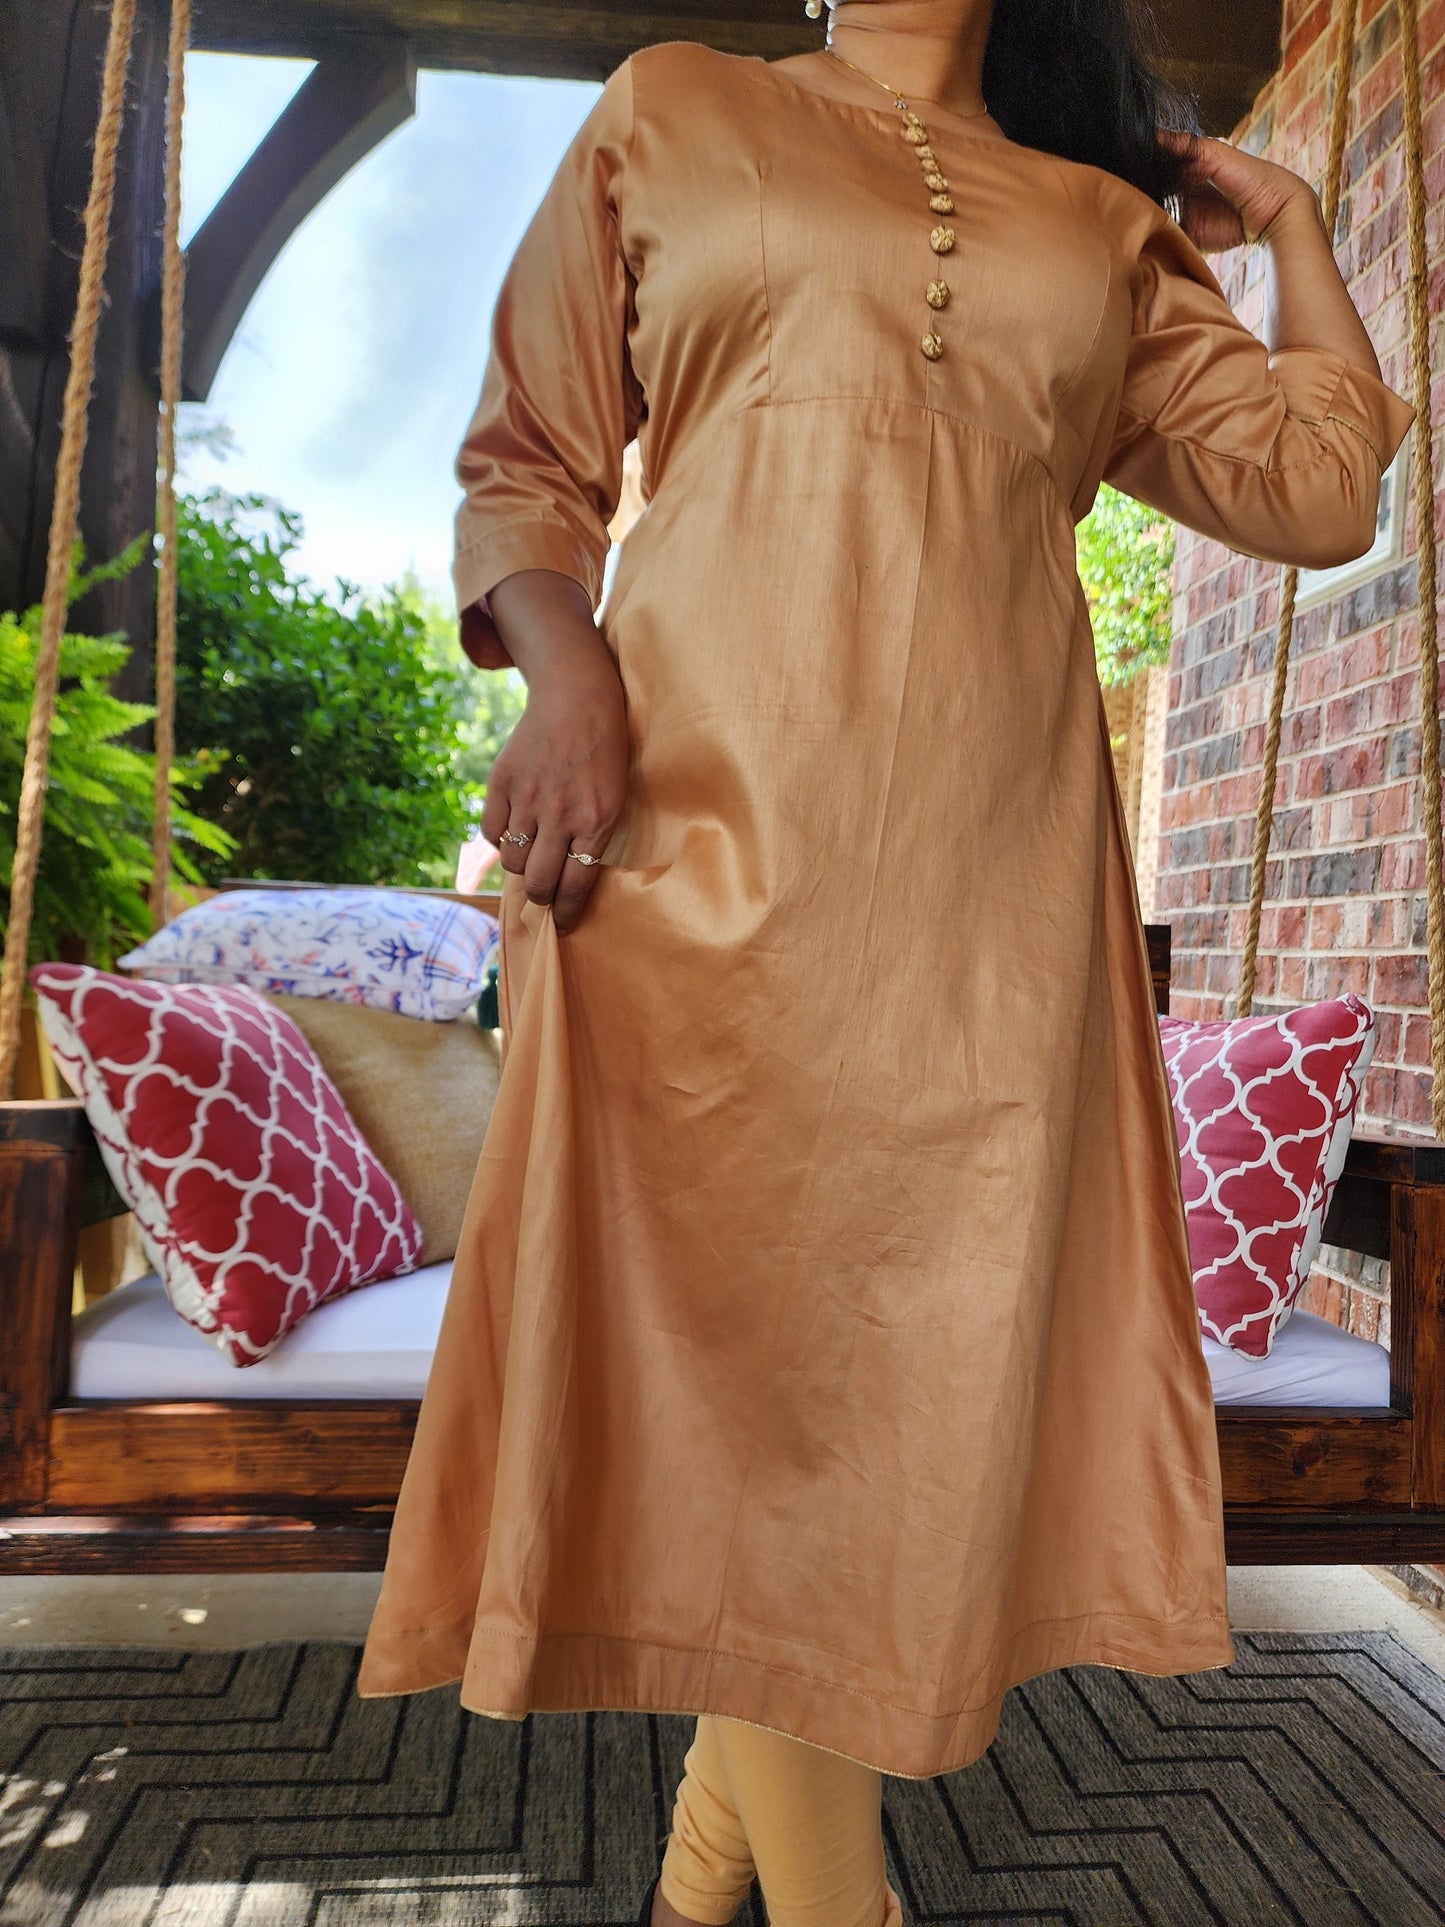 Indian A Line Style Kurta / Kurti, Beige and Gold Color Elegant Long Suit Dress, Leggings & Banarasi Dupatta set, Silky Smooth Designer Suit